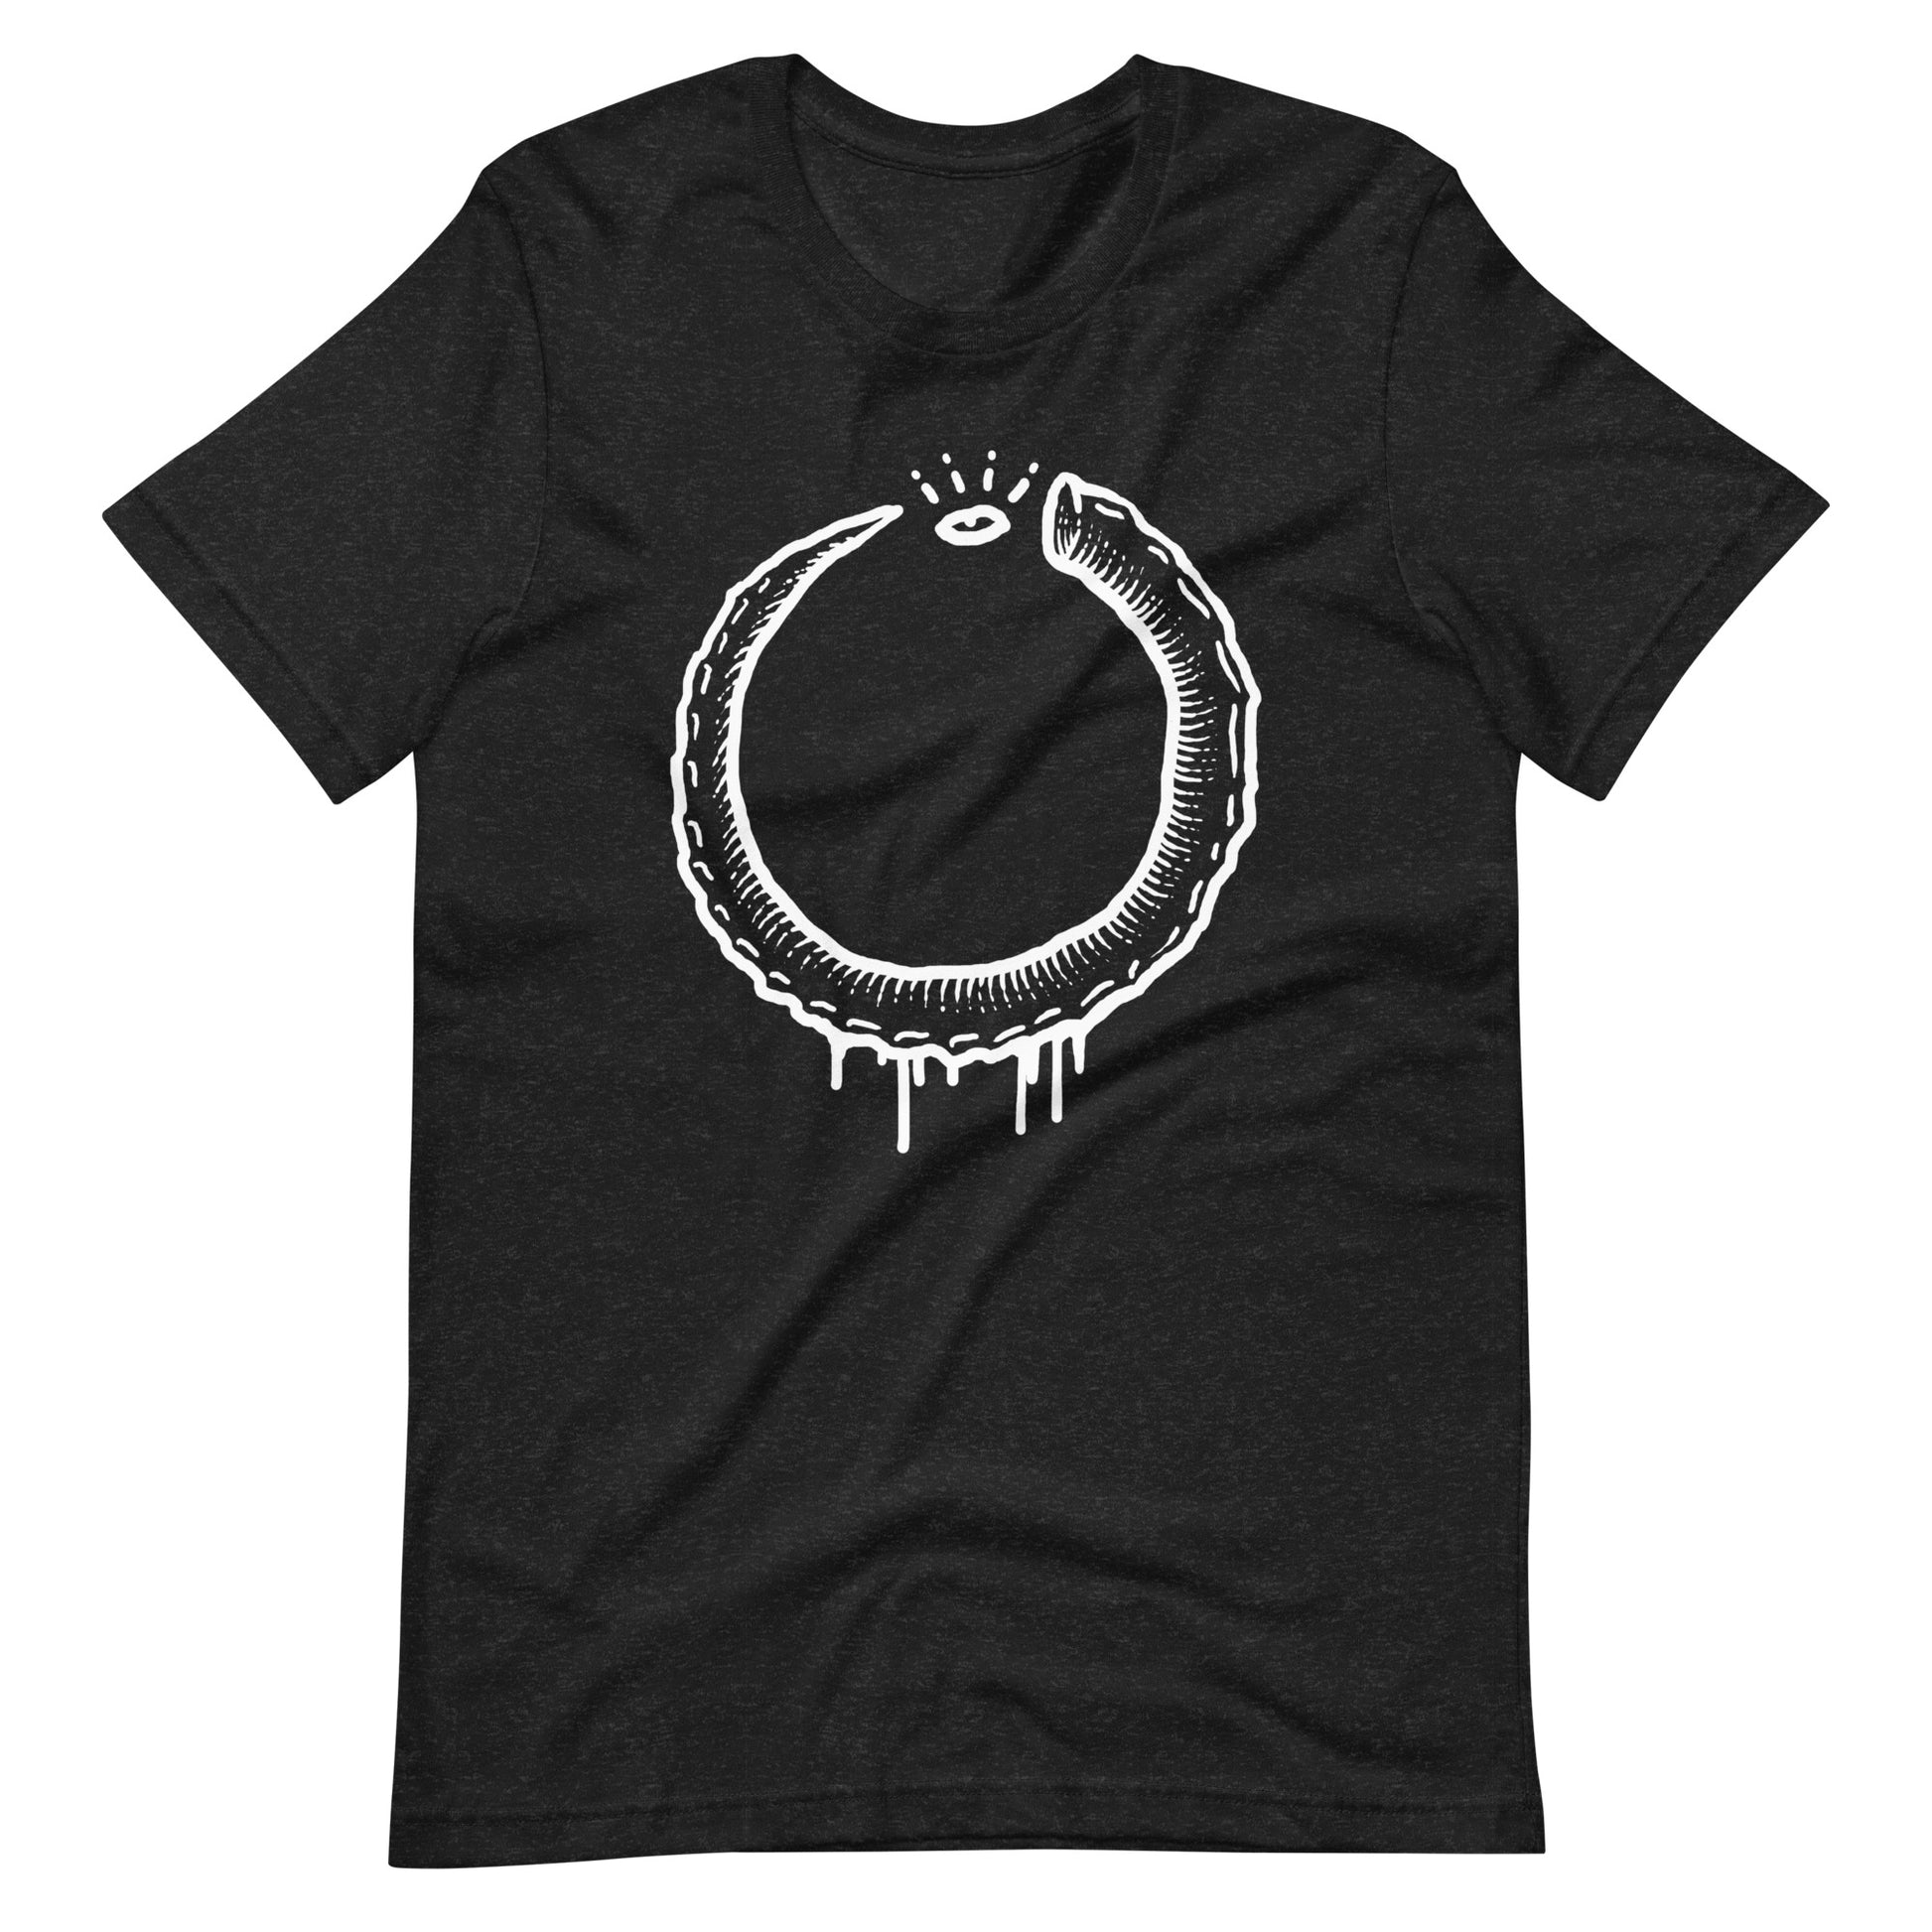 Horns - Men's t-shirt - Black Heather Front